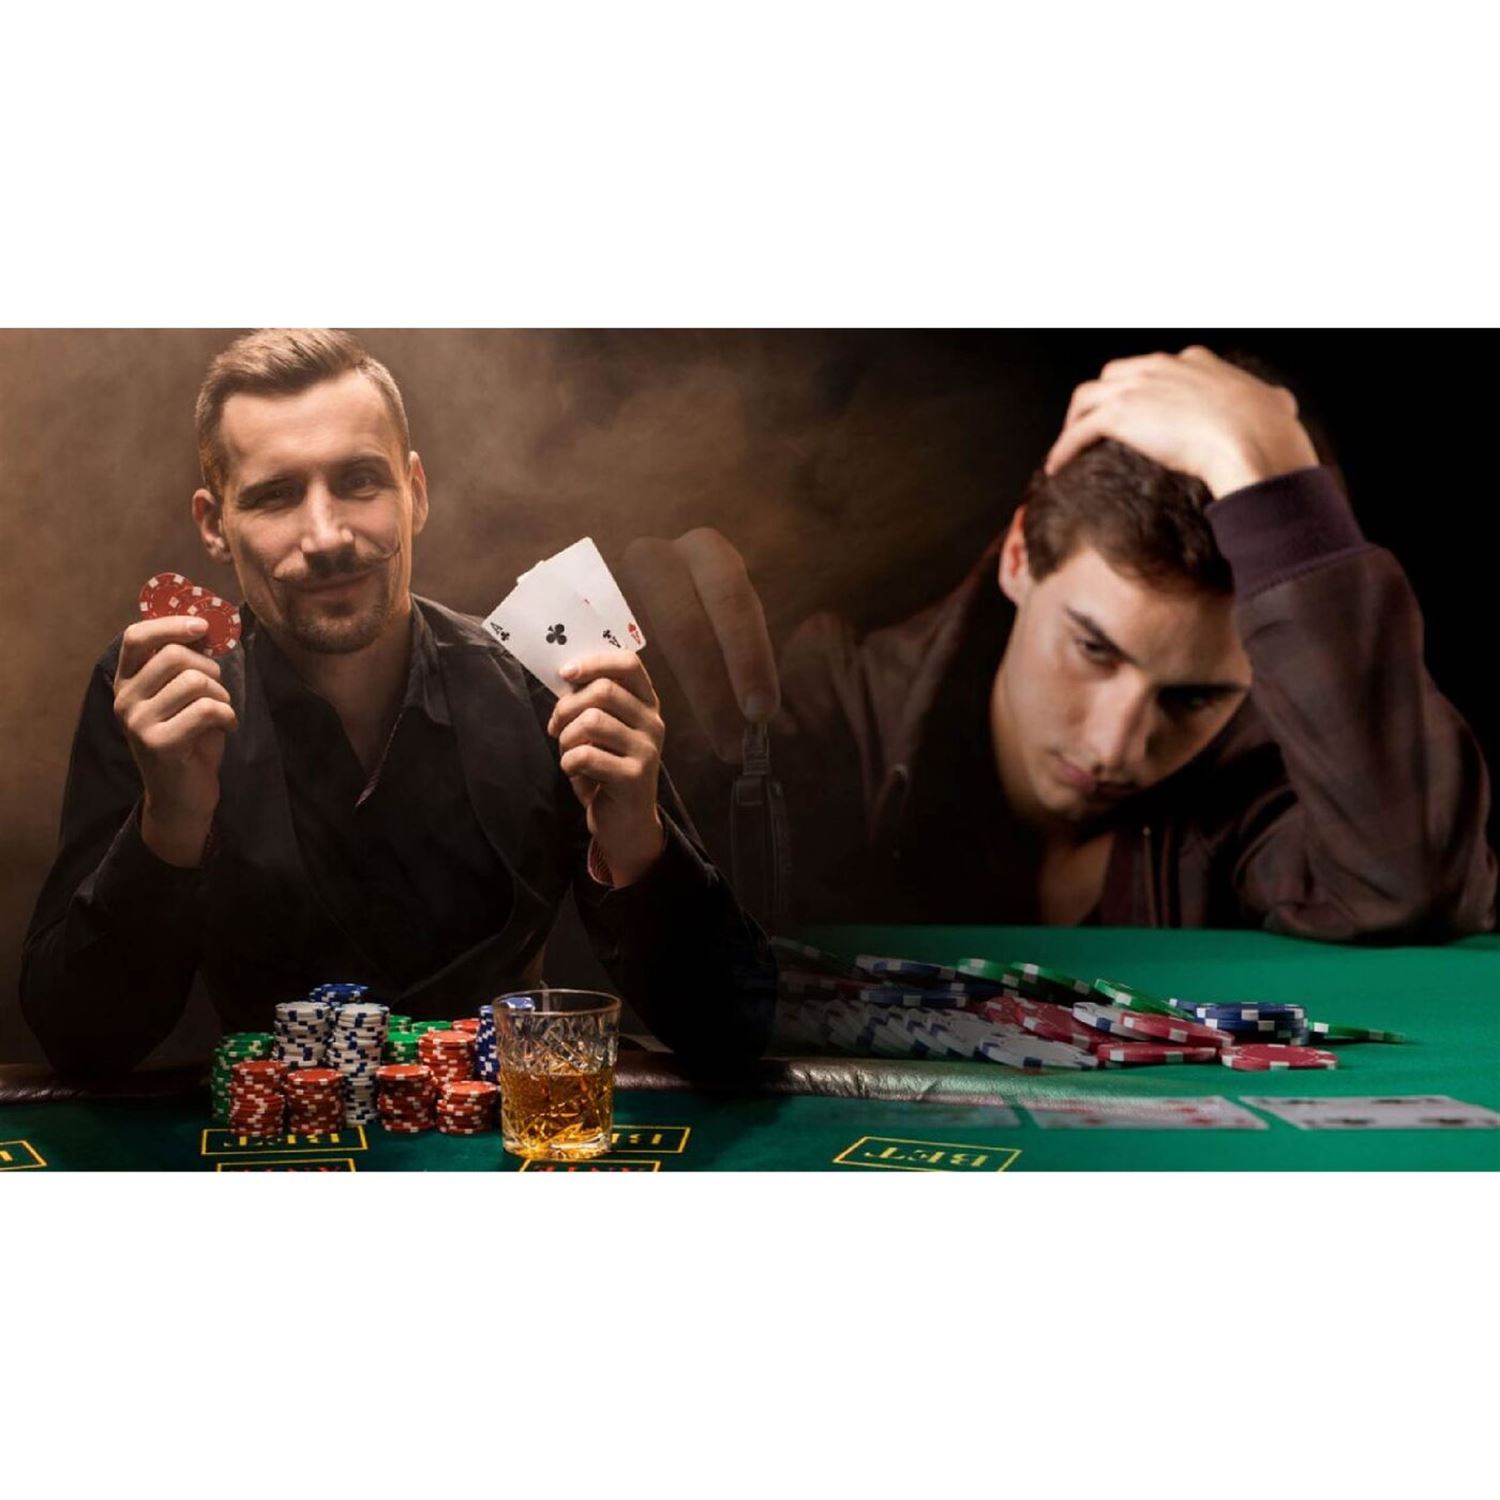 Gambling and deceiving yourself